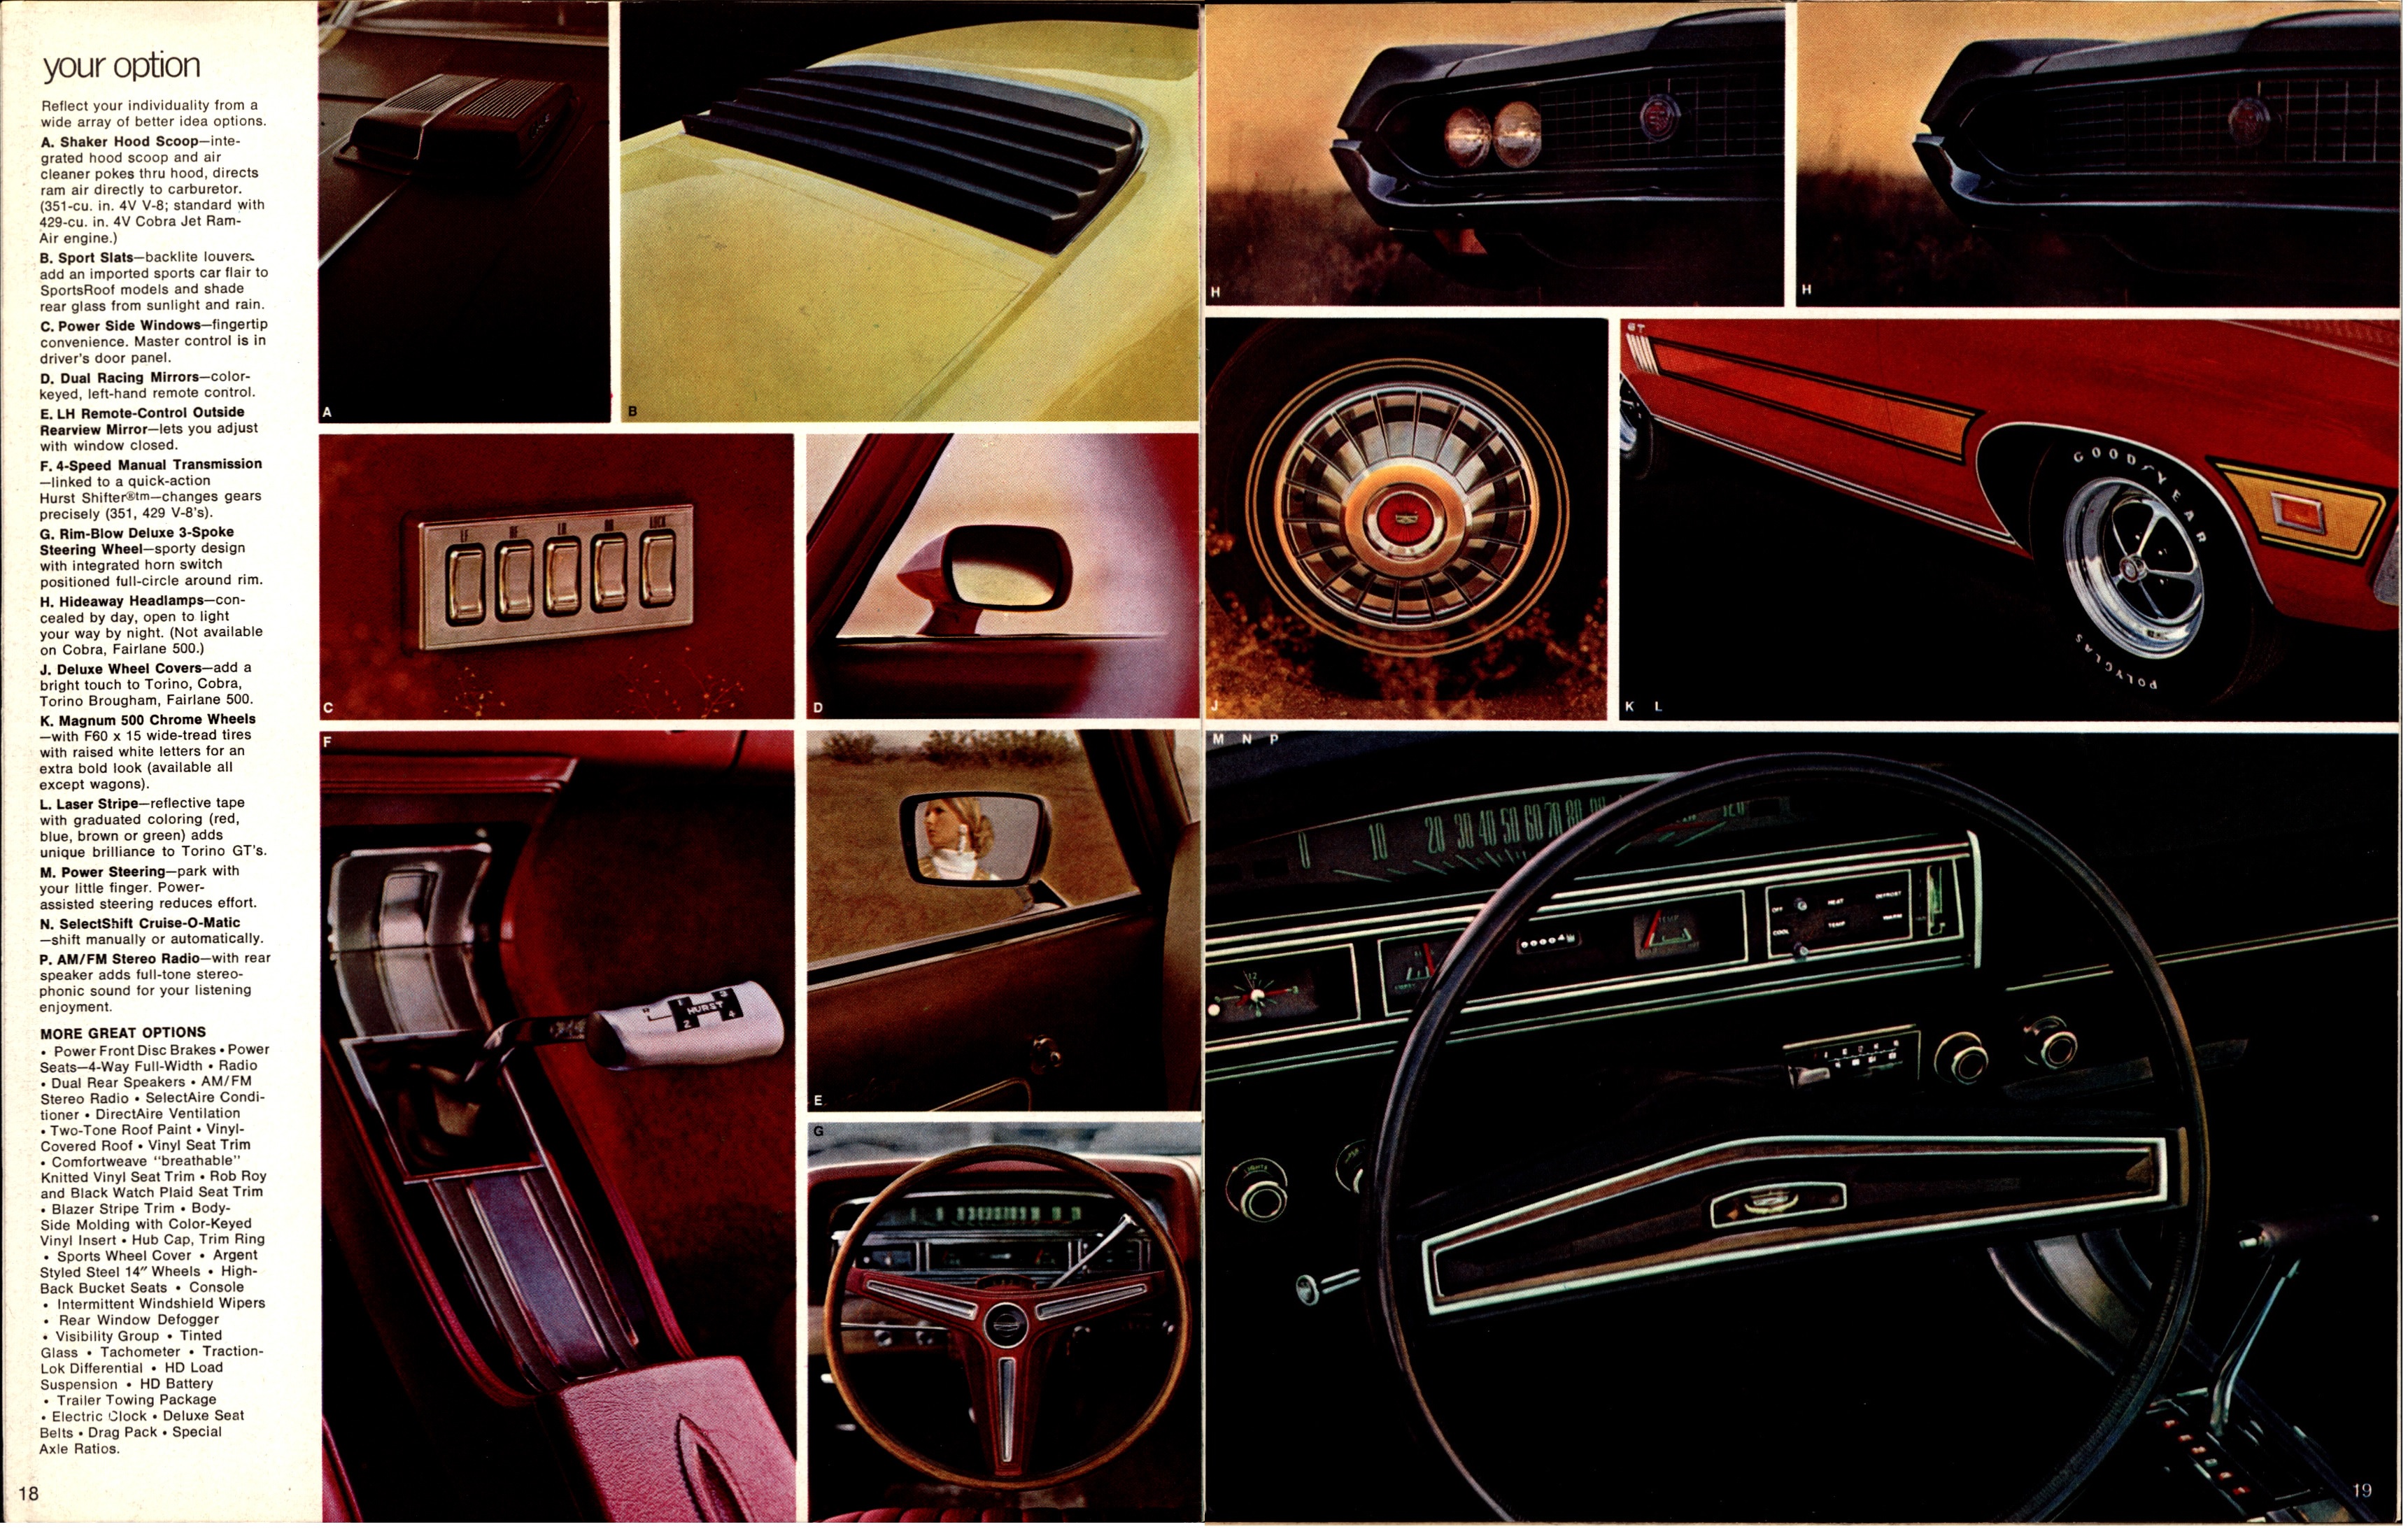 1970 Ford Torino Brochure (Cdn) 18-19